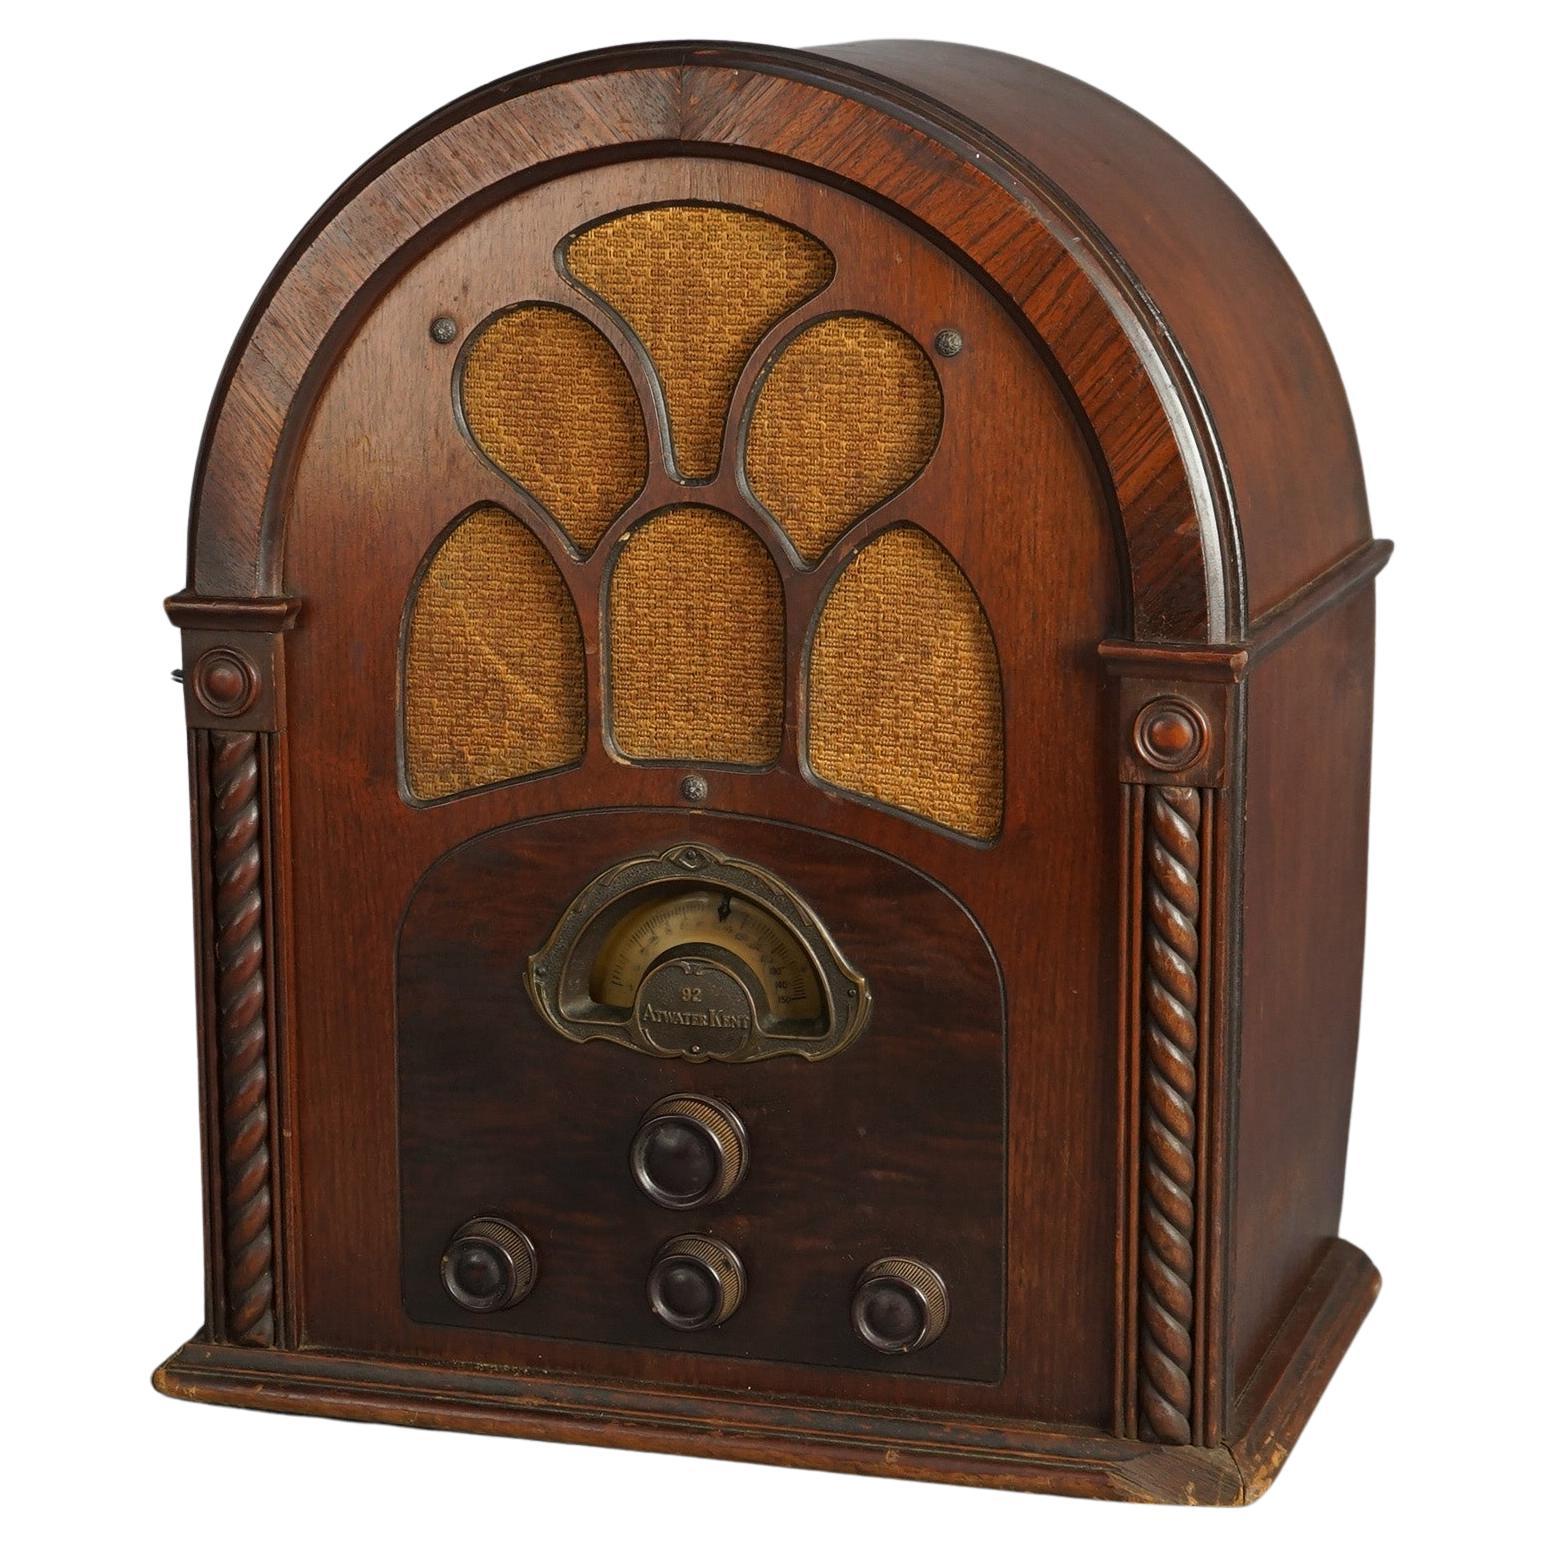 What is the best vintage radio?